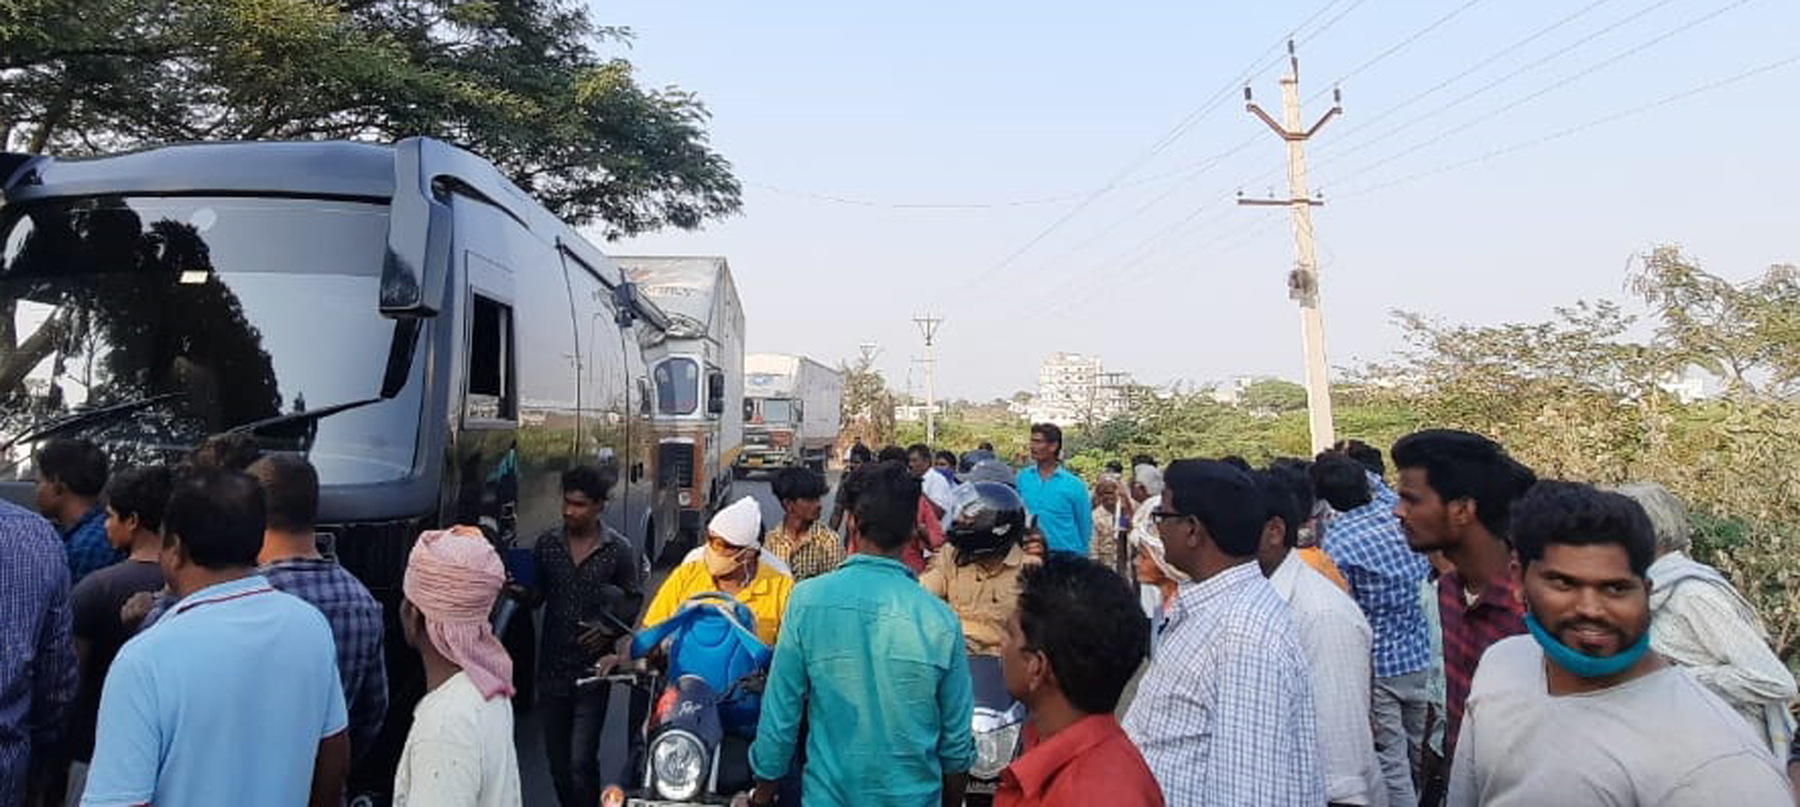 Allu Arjun Caravan Meets with Accident in Khammam